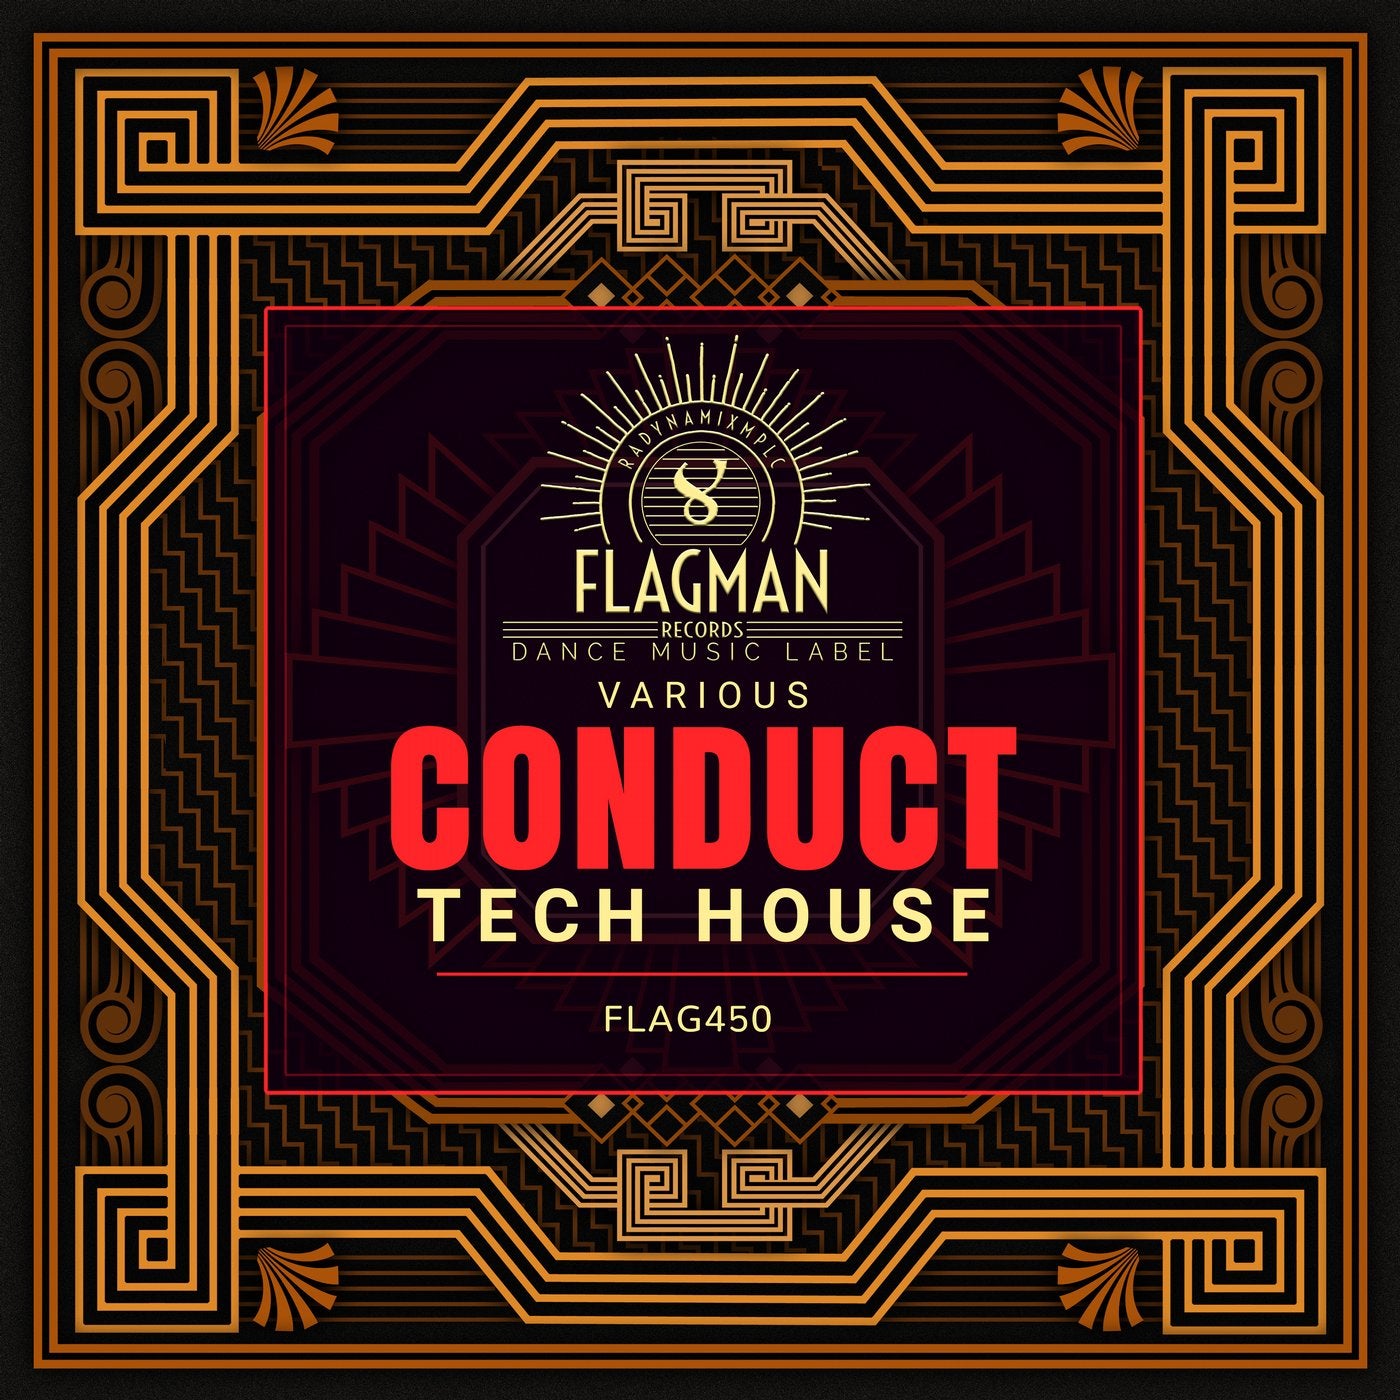 Conduct Tech House